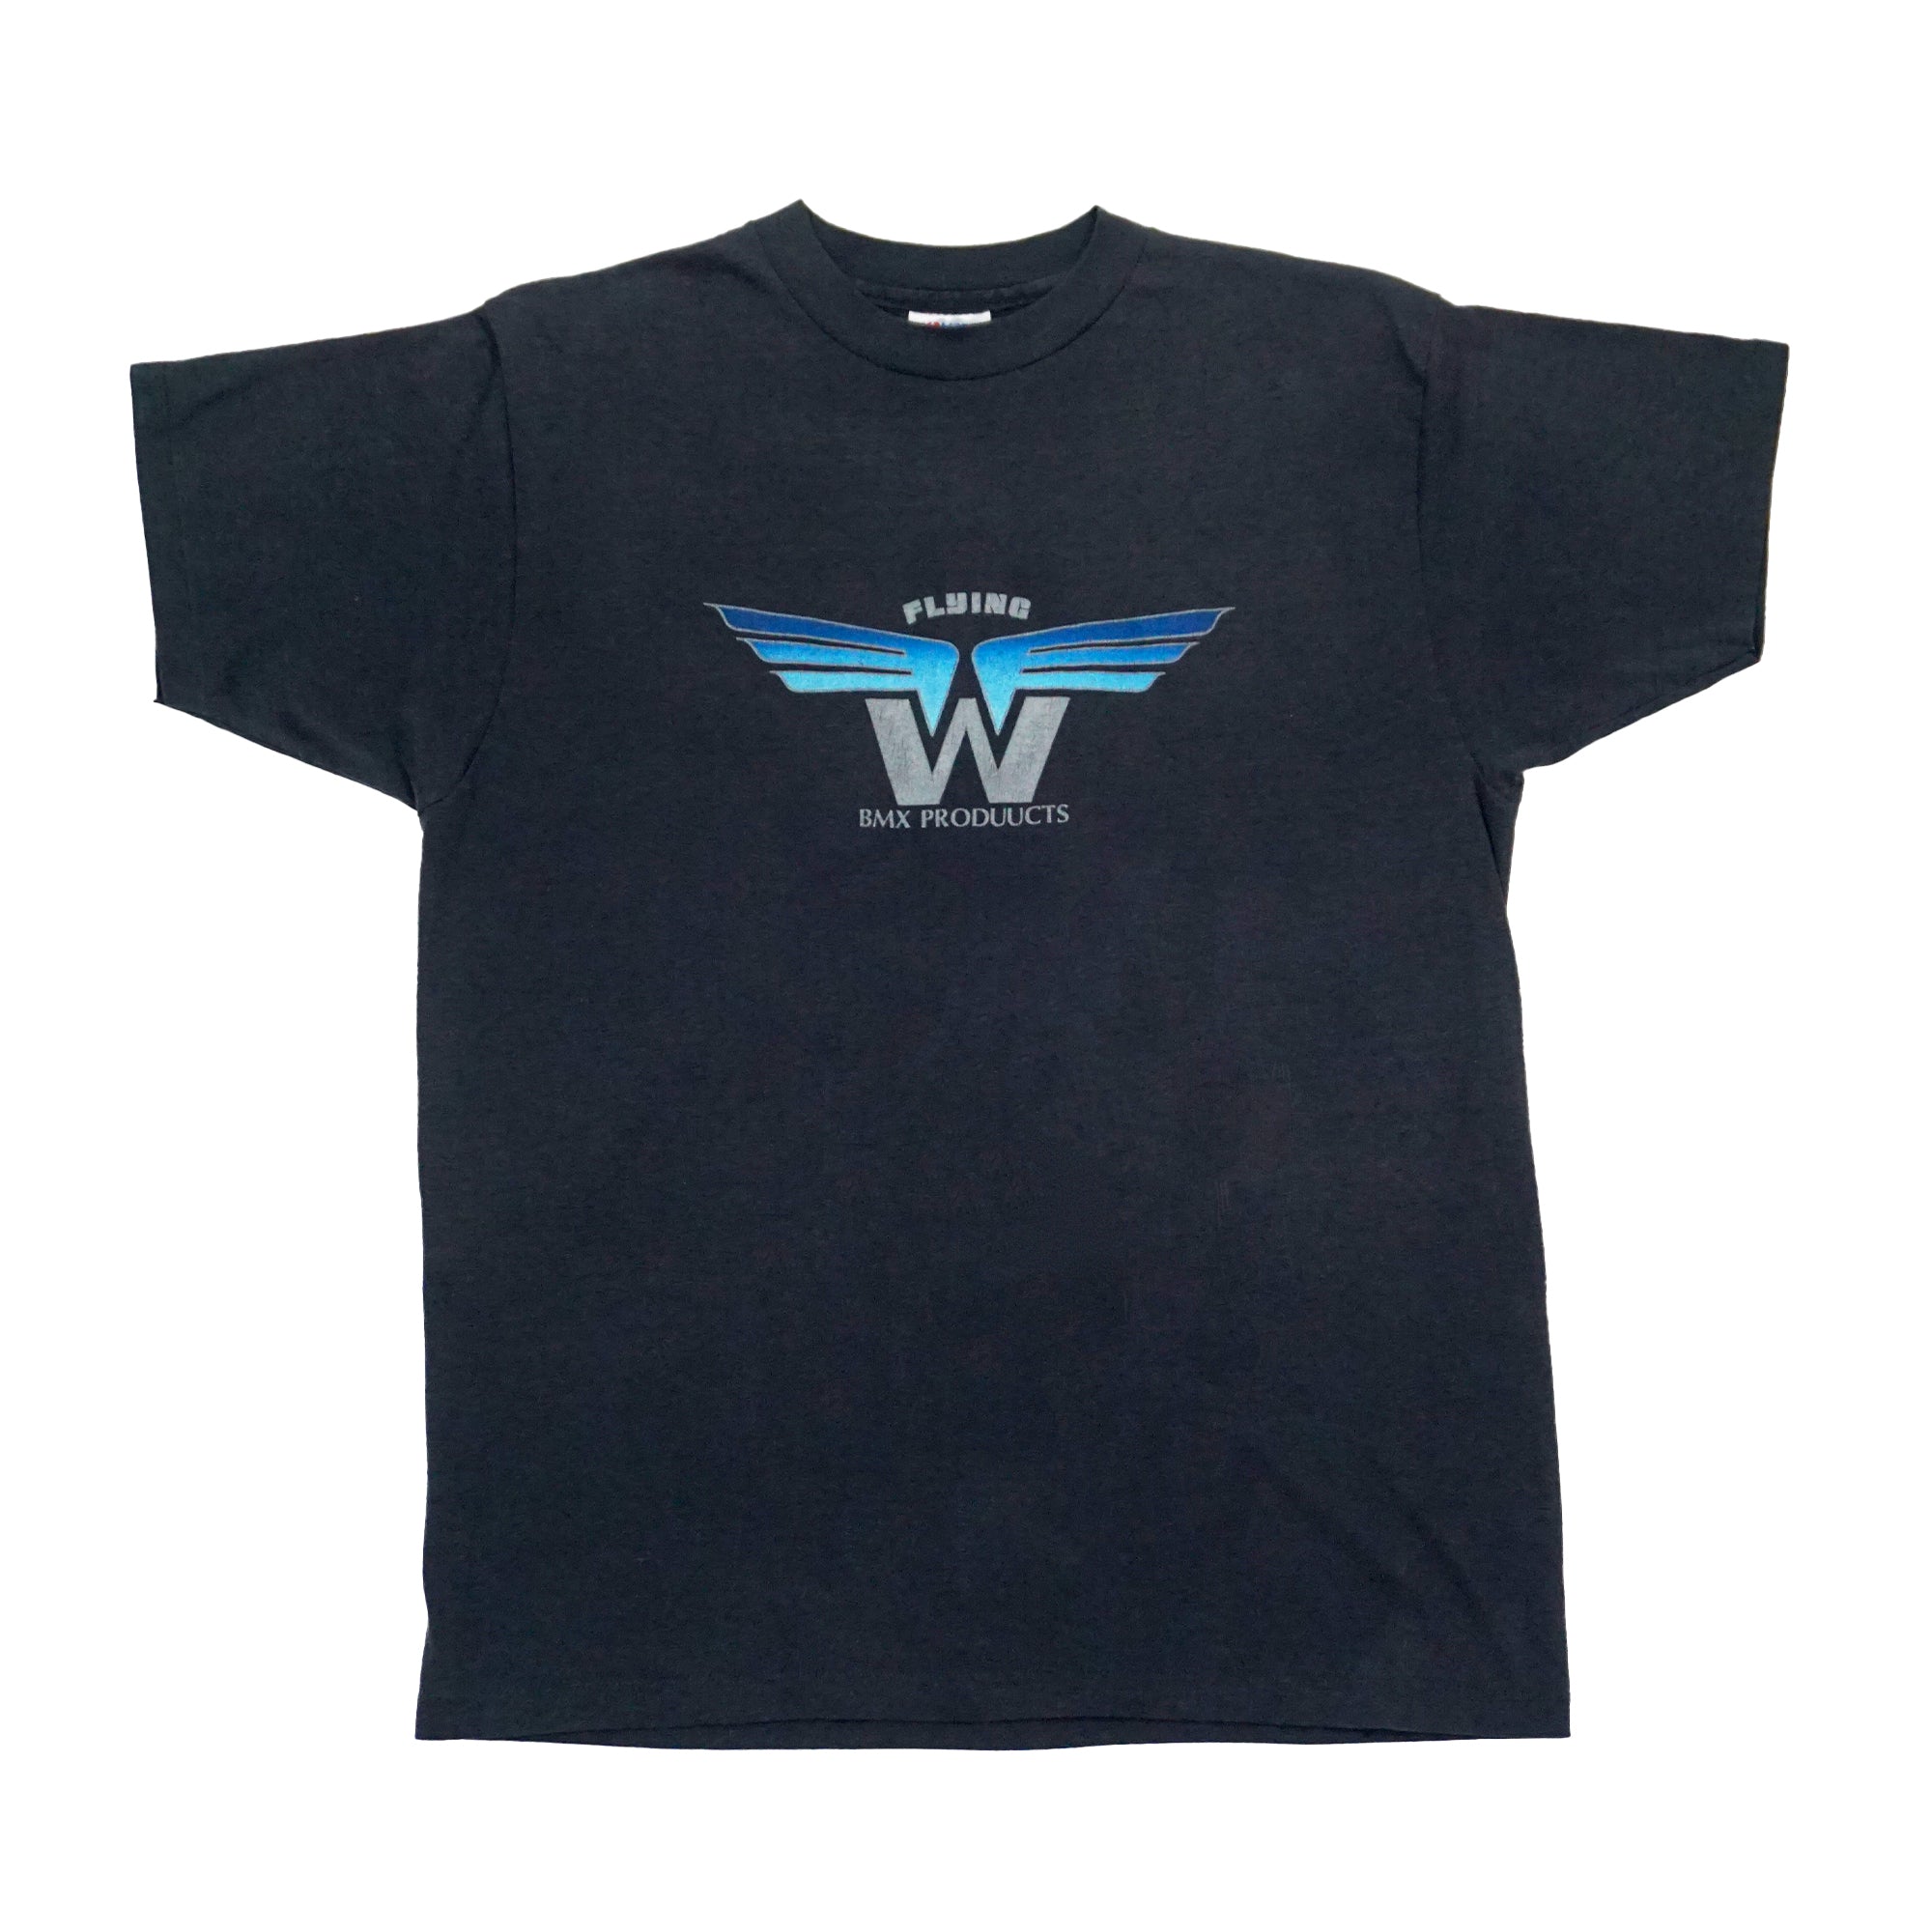 Flying W BMX Products - Logo Misprint Shirt (XL)